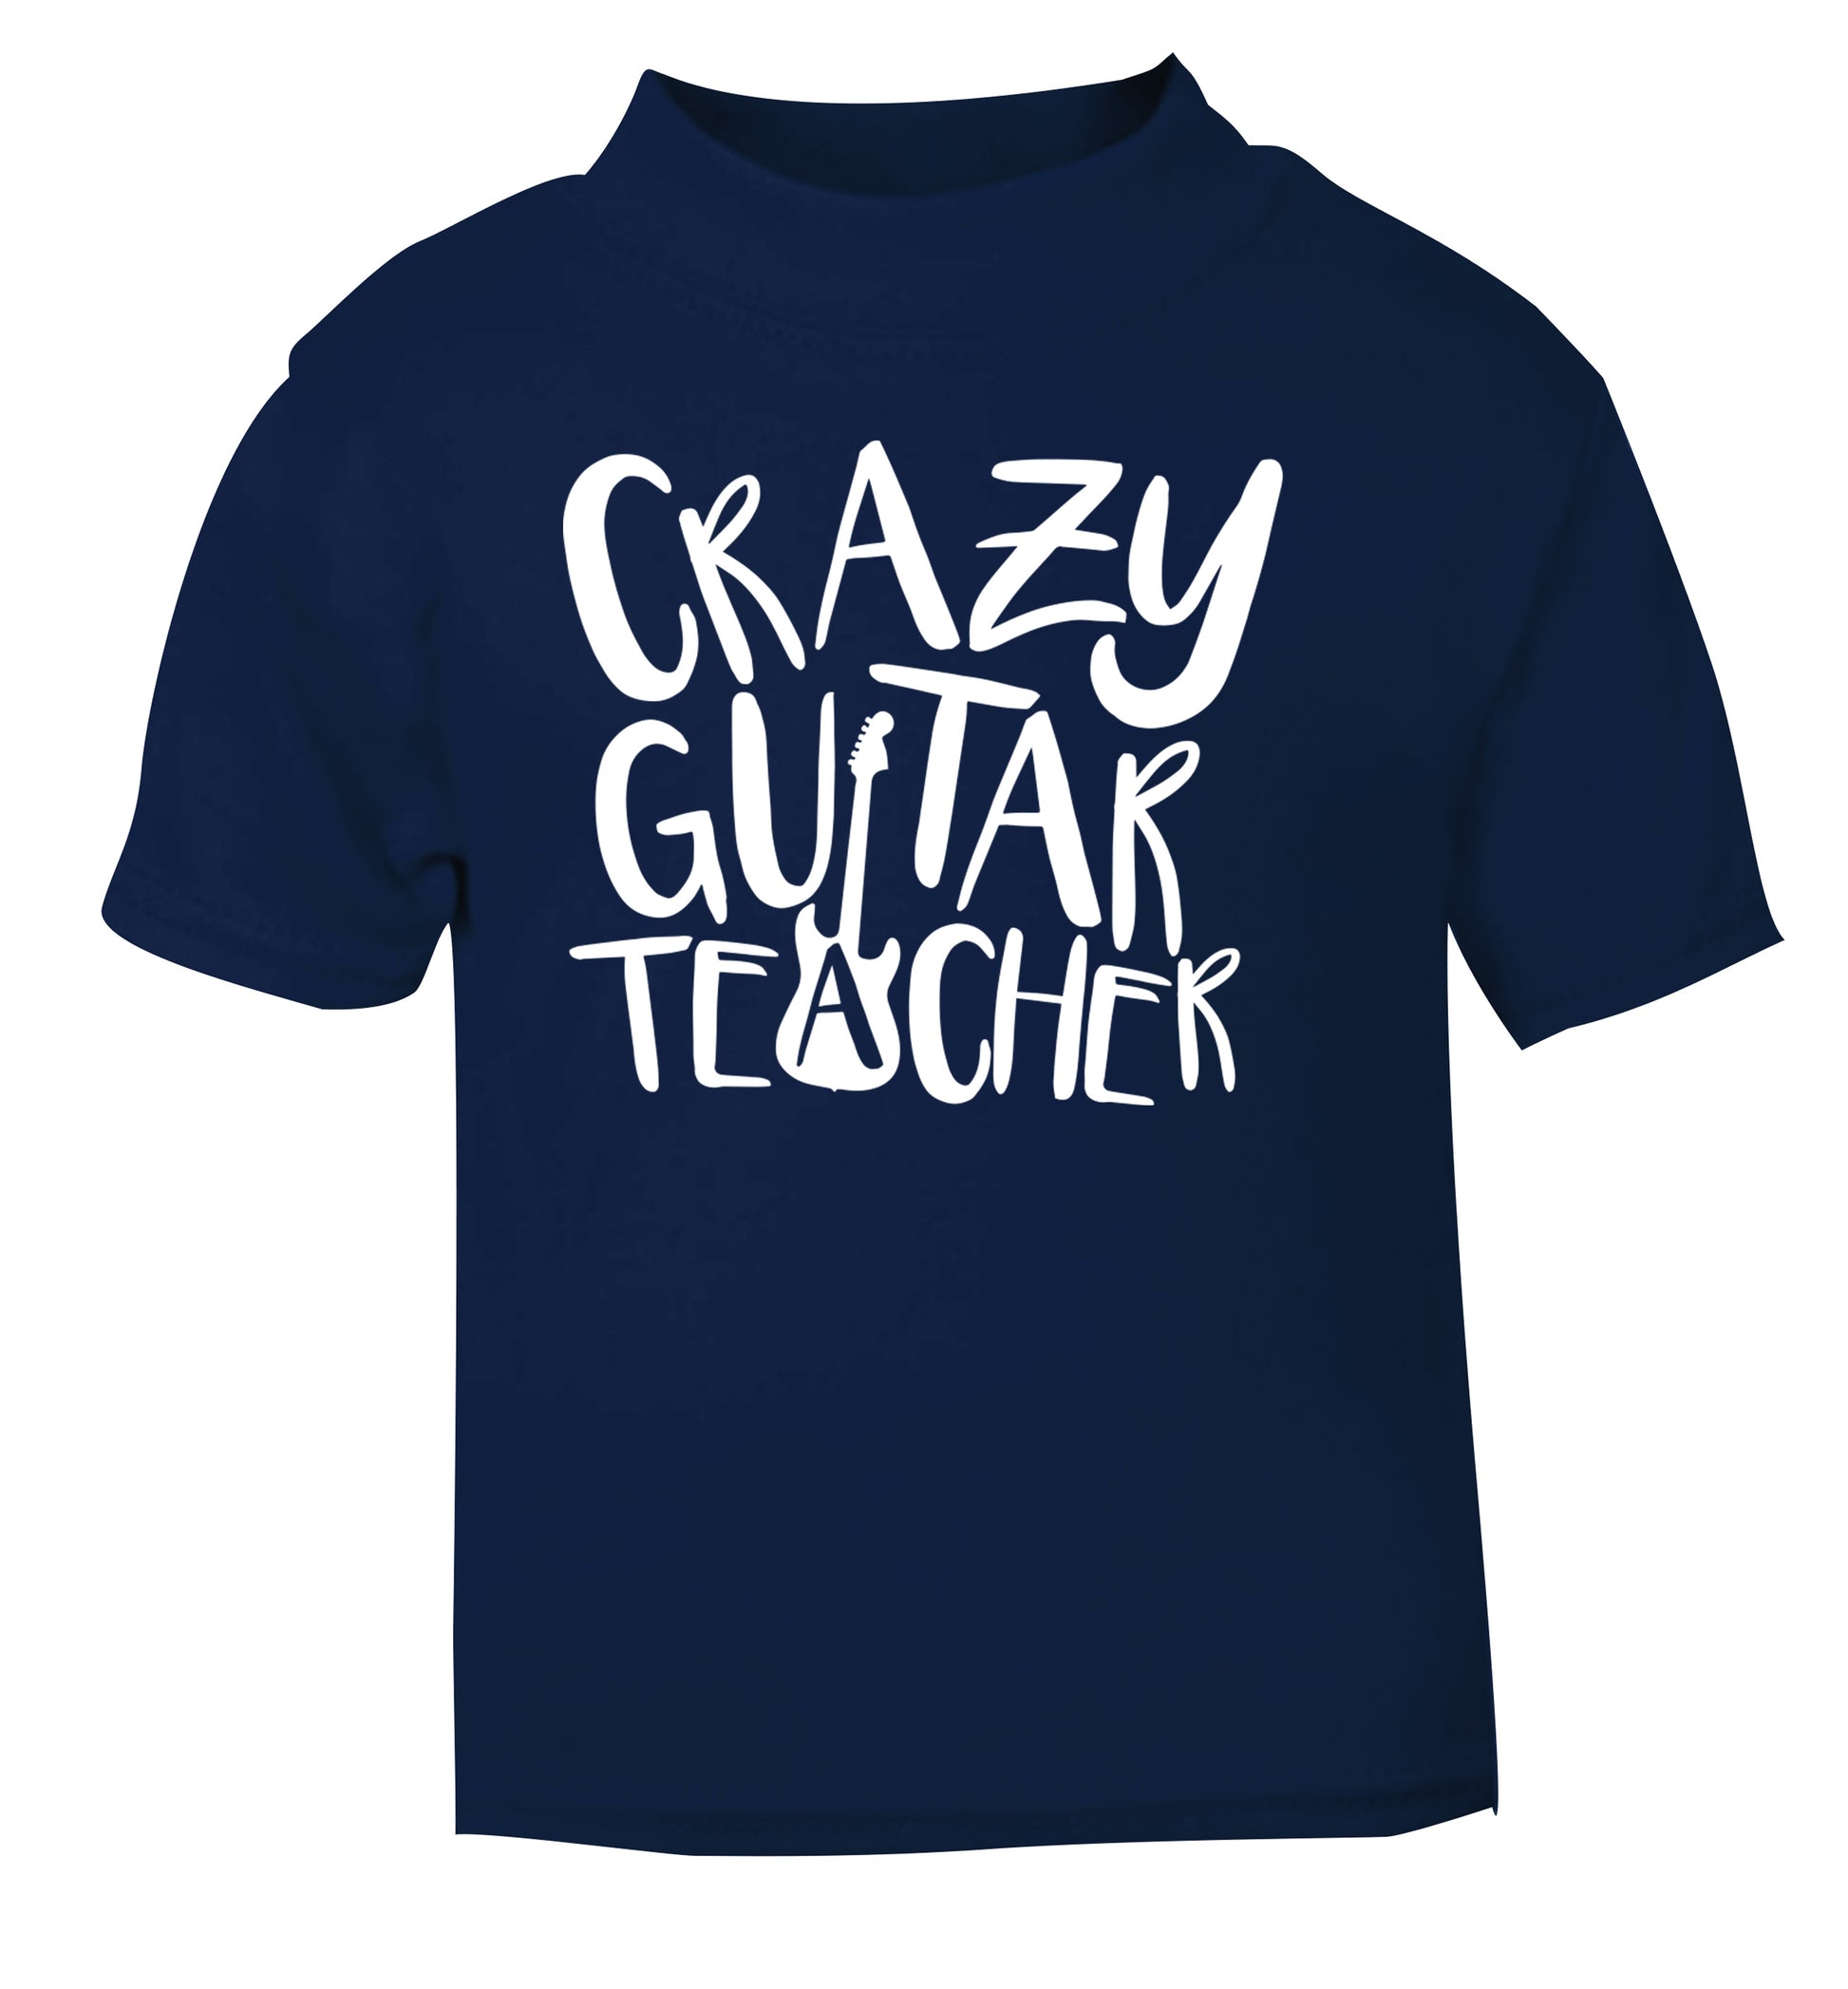 Crazy guitar teacher navy Baby Toddler Tshirt 2 Years